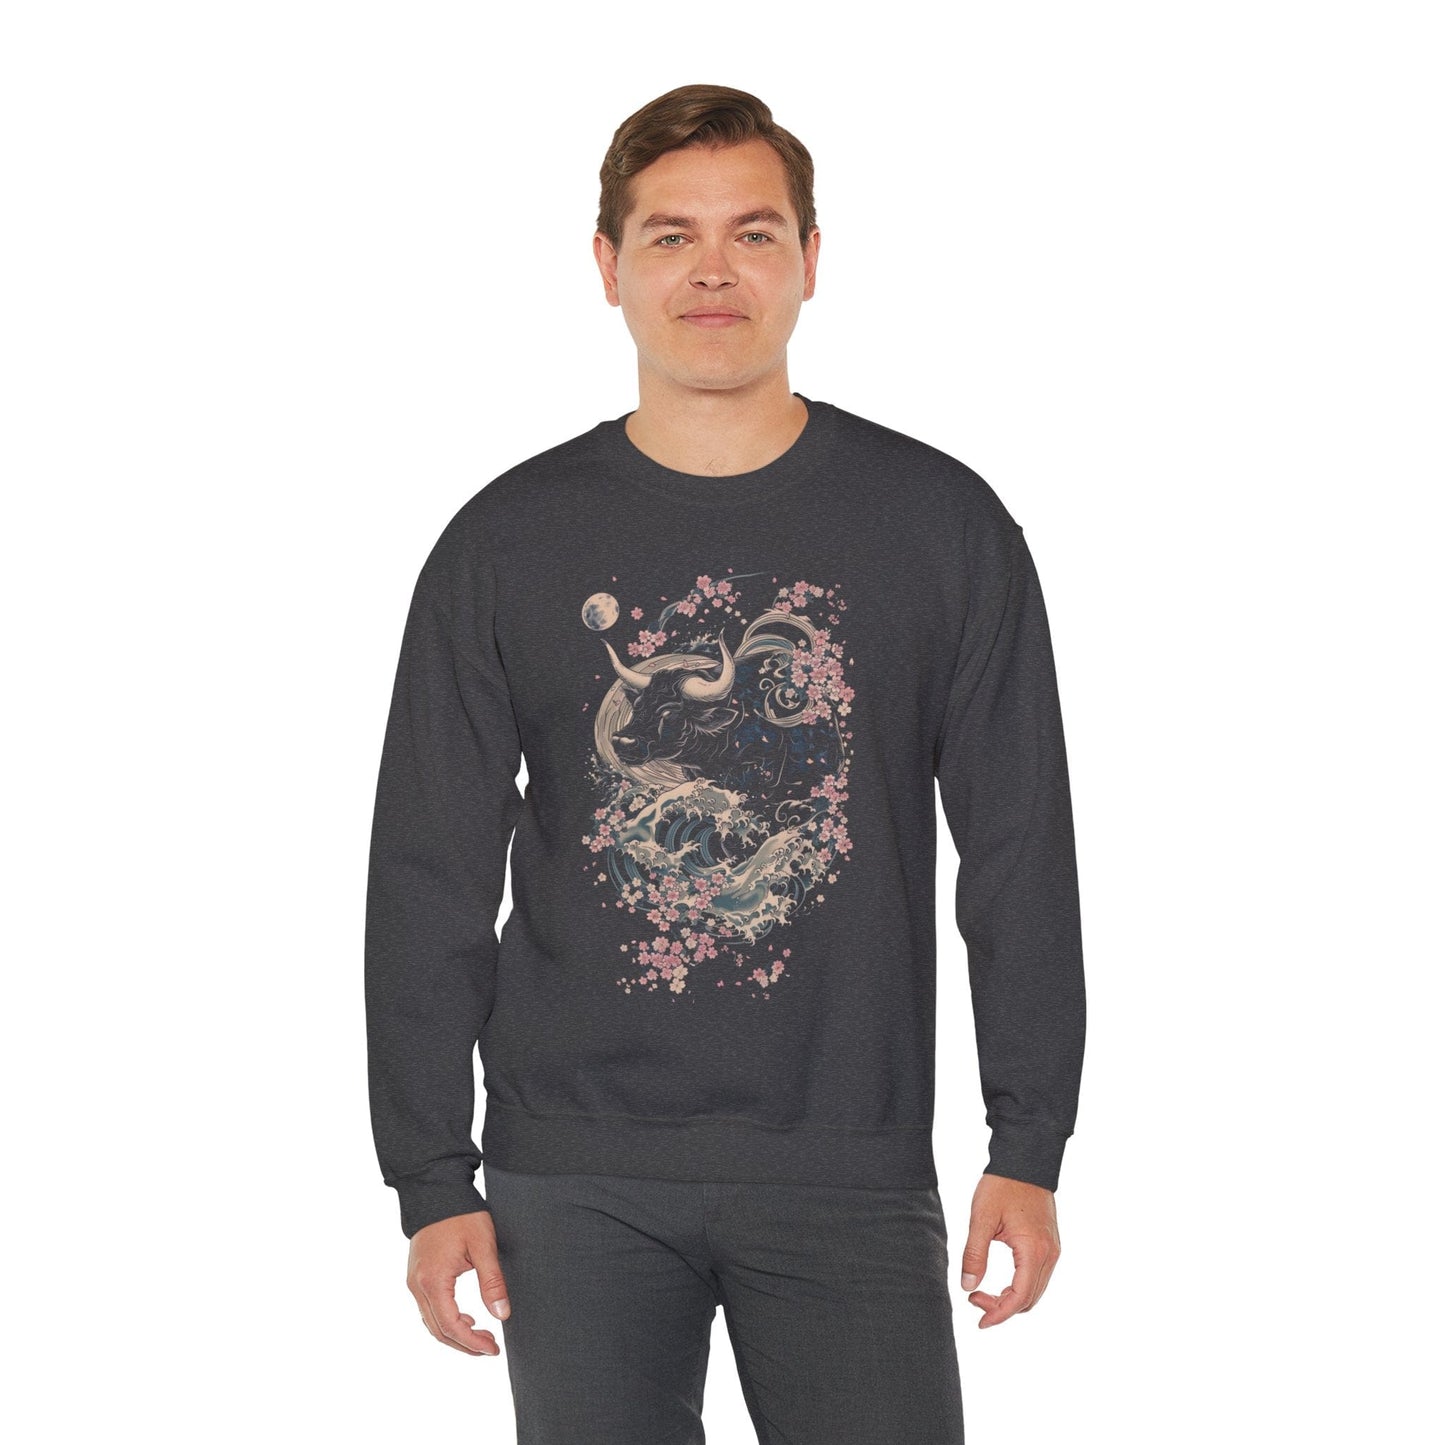 Sweatshirt Taurus Blossom Embrace Sweater: Serenity in Bloom